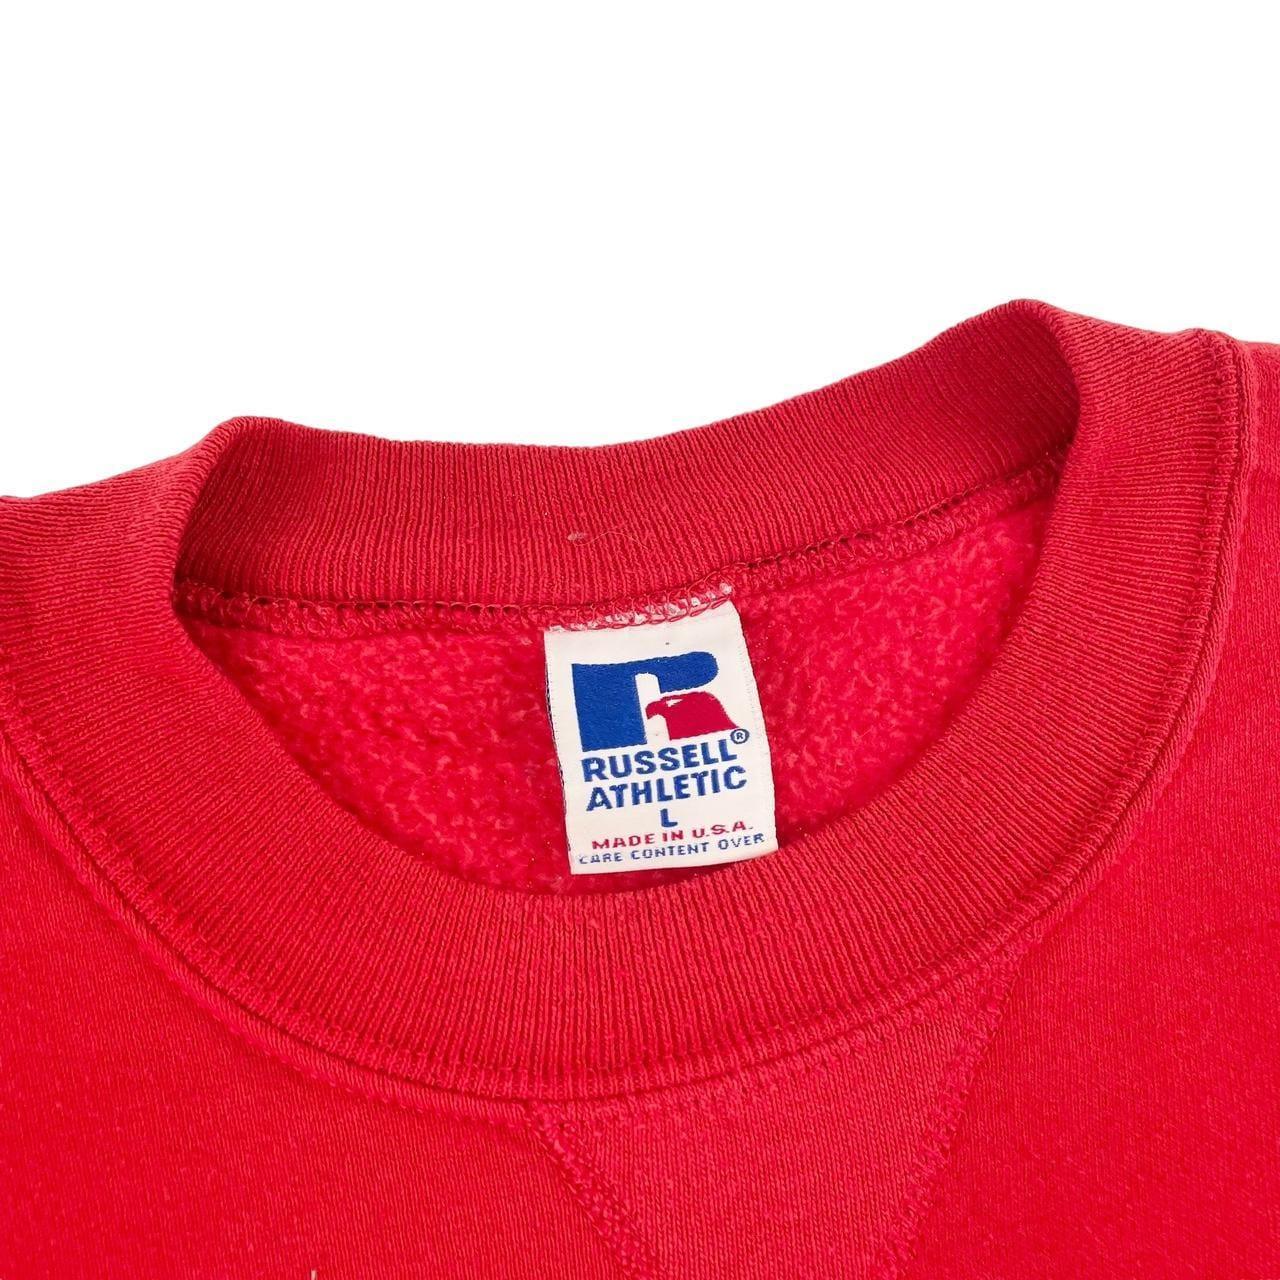 Vintage Russel Athletic blank jumper sweatshirt size L - Known Source